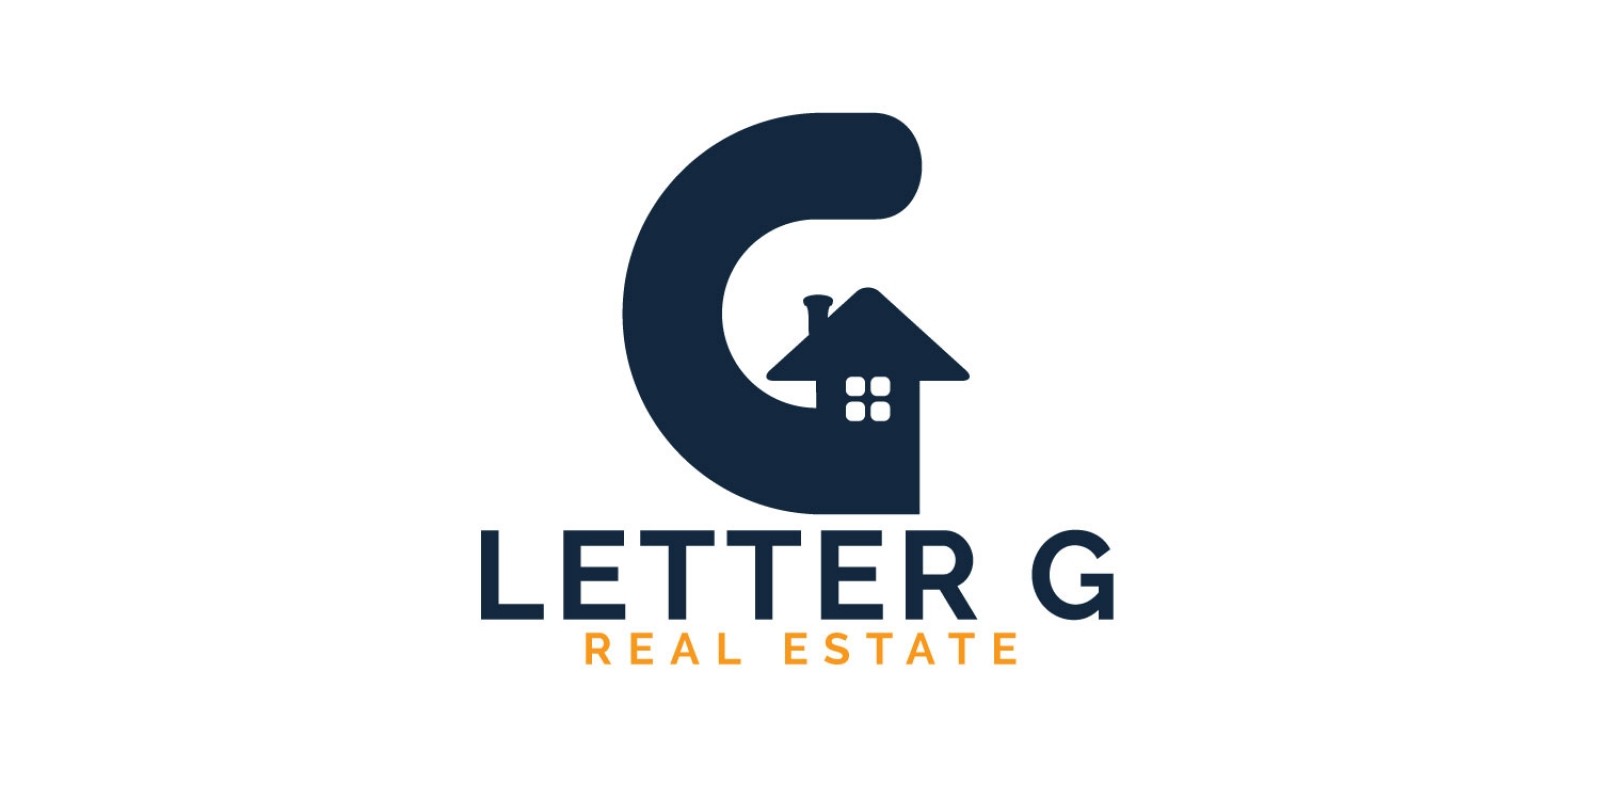 C a g house. Home логотип. G Letter Design. Letter g logo. Letter a logo Gear.